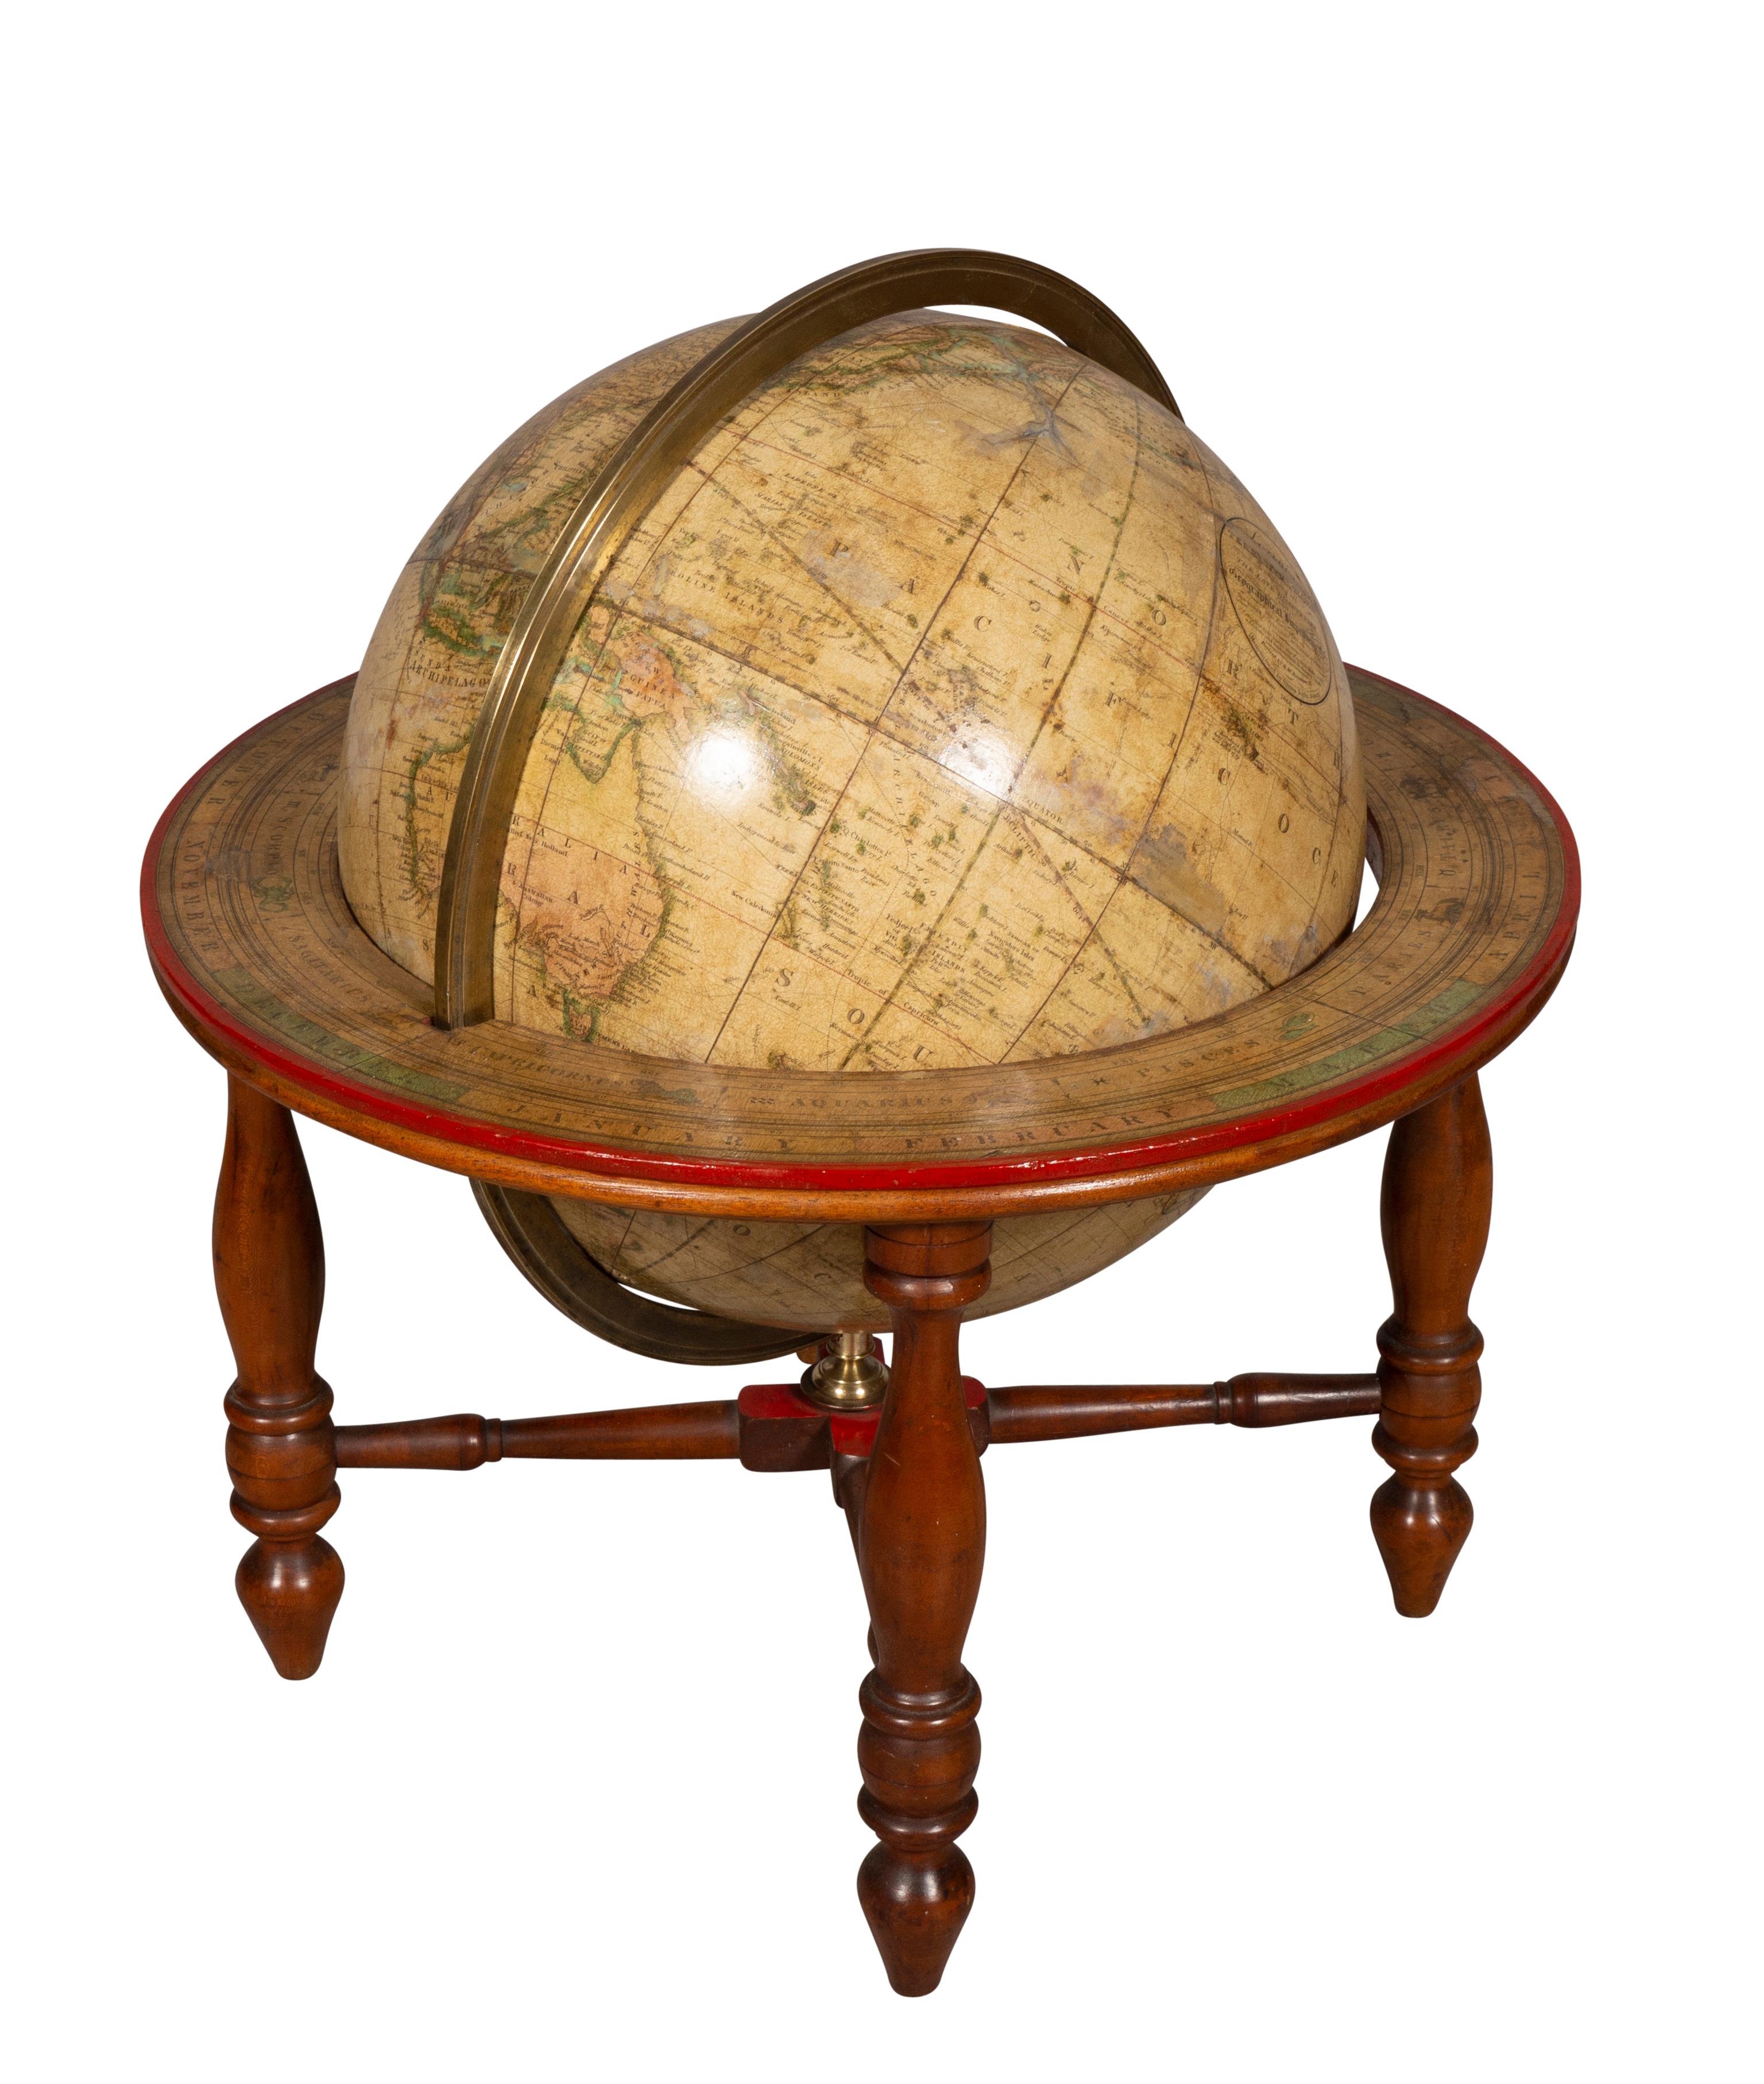 Lorings terrestrial globe made by Gilman Joslin, Boston Mass.